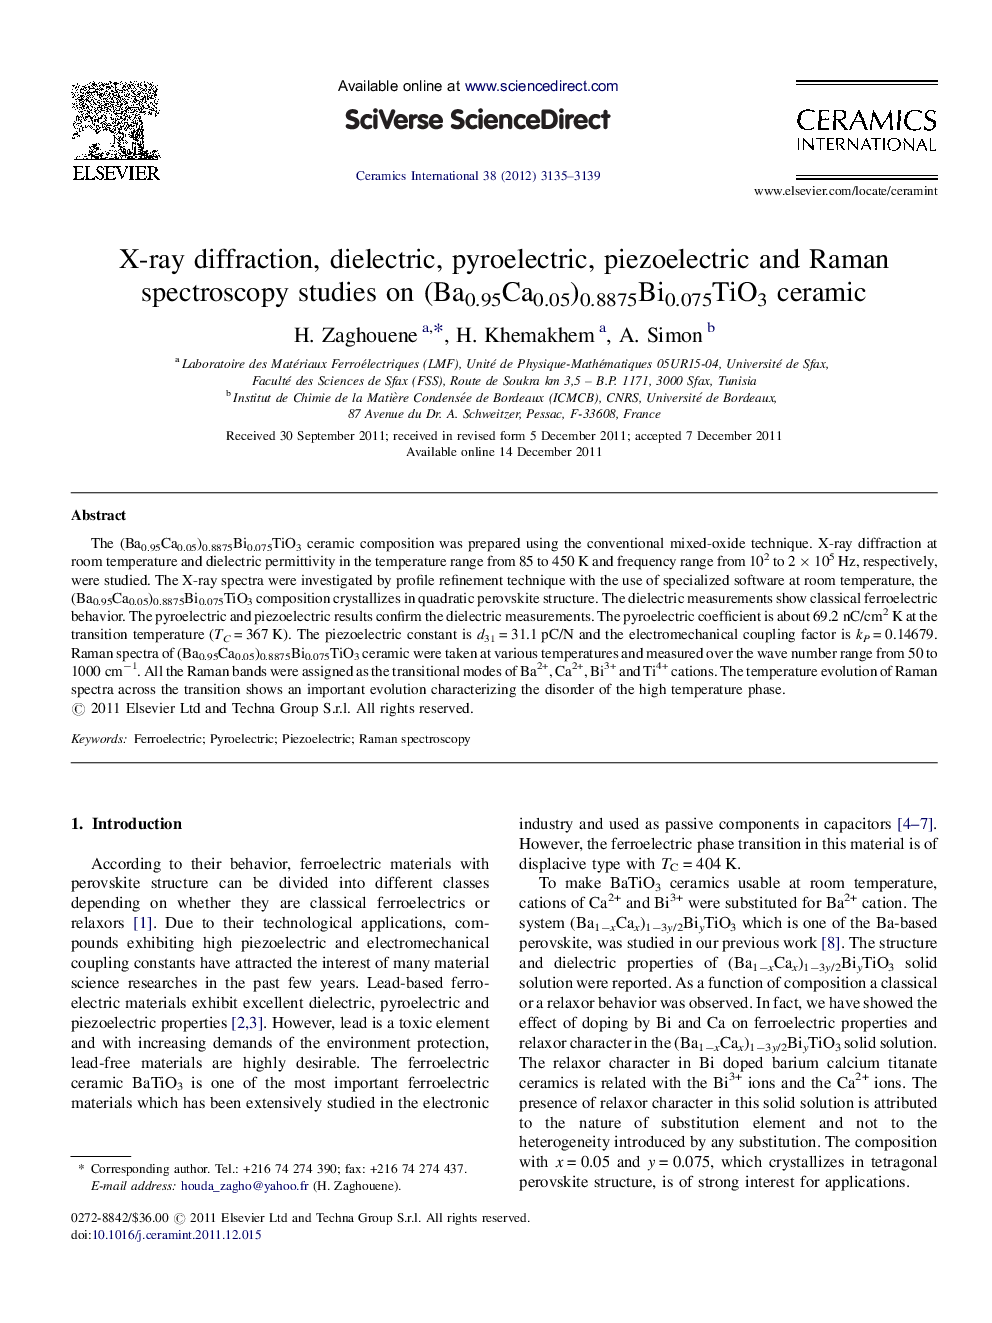 X-ray diffraction, dielectric, pyroelectric, piezoelectric and Raman spectroscopy studies on (Ba0.95Ca0.05)0.8875Bi0.075TiO3 ceramic